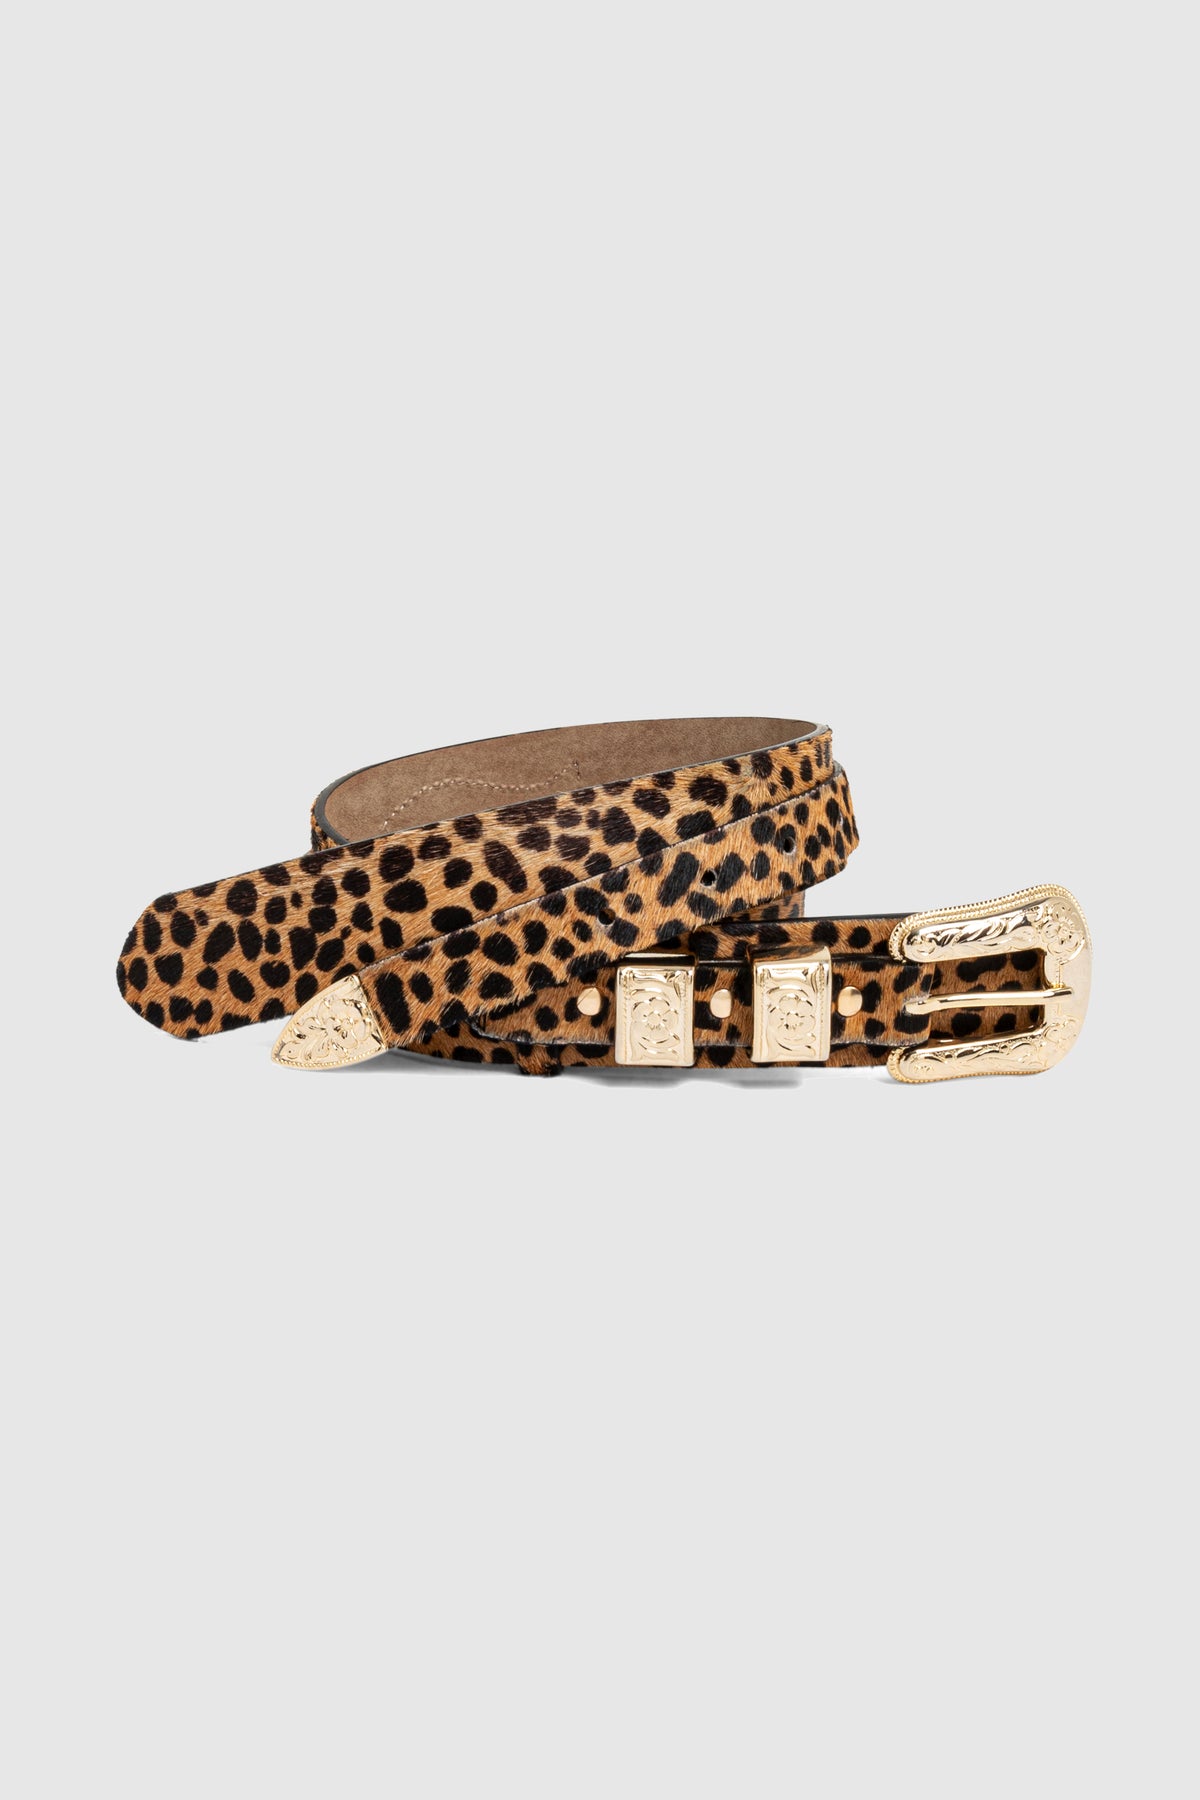 Texan belt in Cheetah printed leather